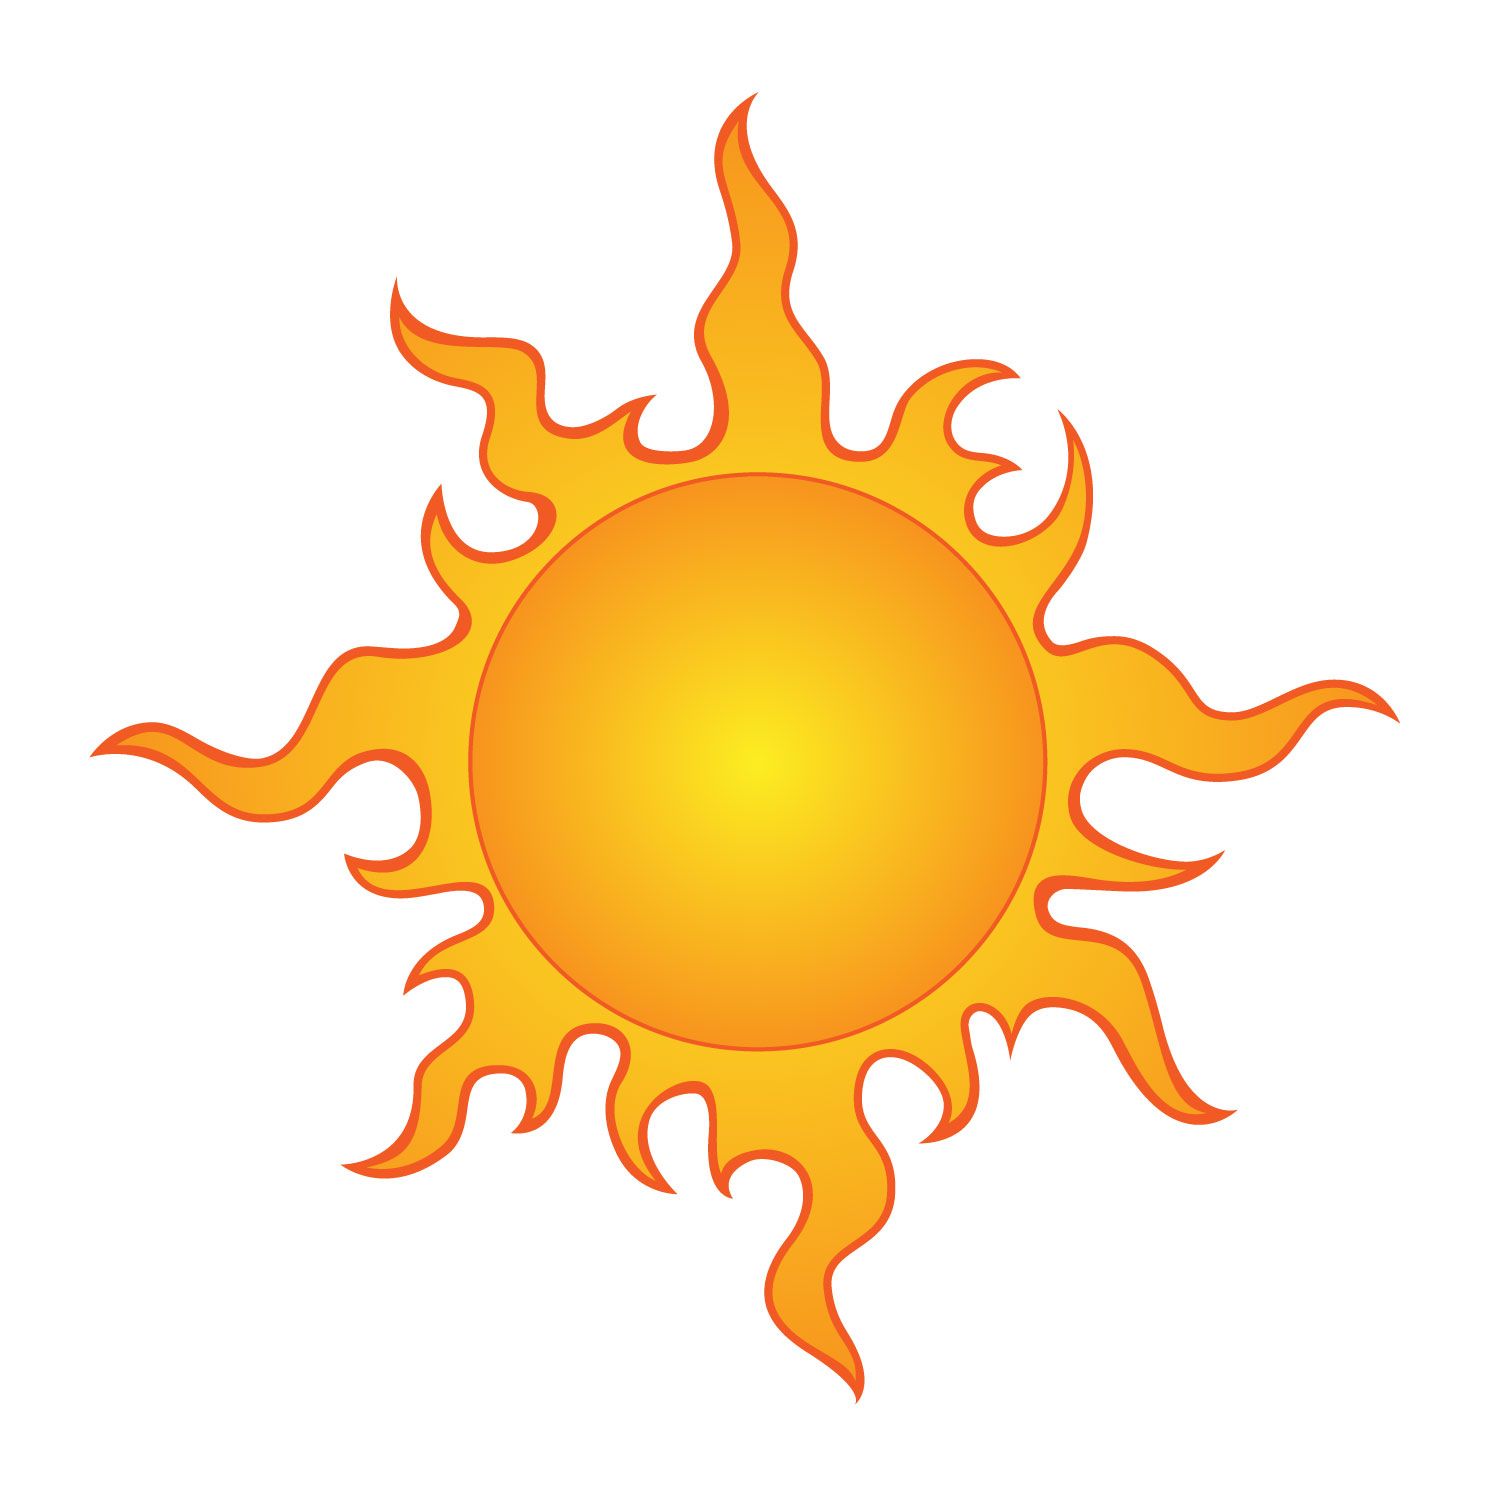 Sun vector image.